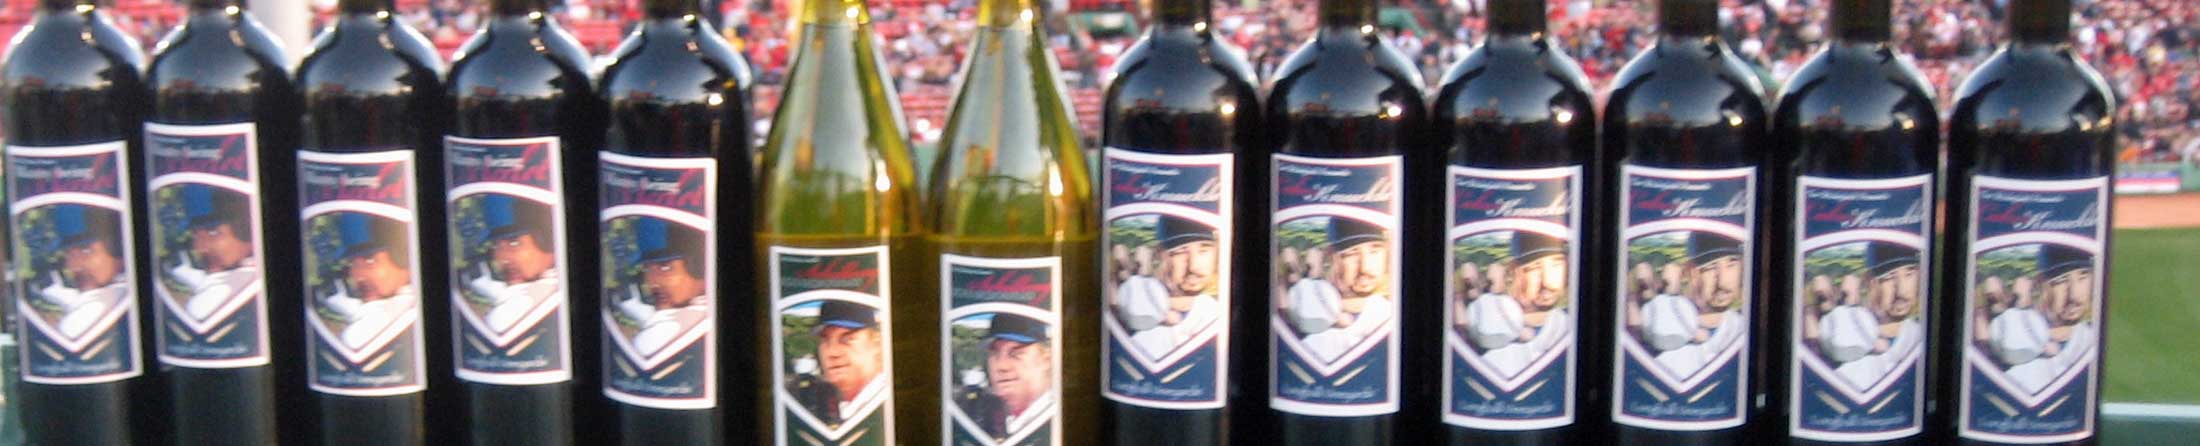 2007 Boston Red Sox Wine Bottles